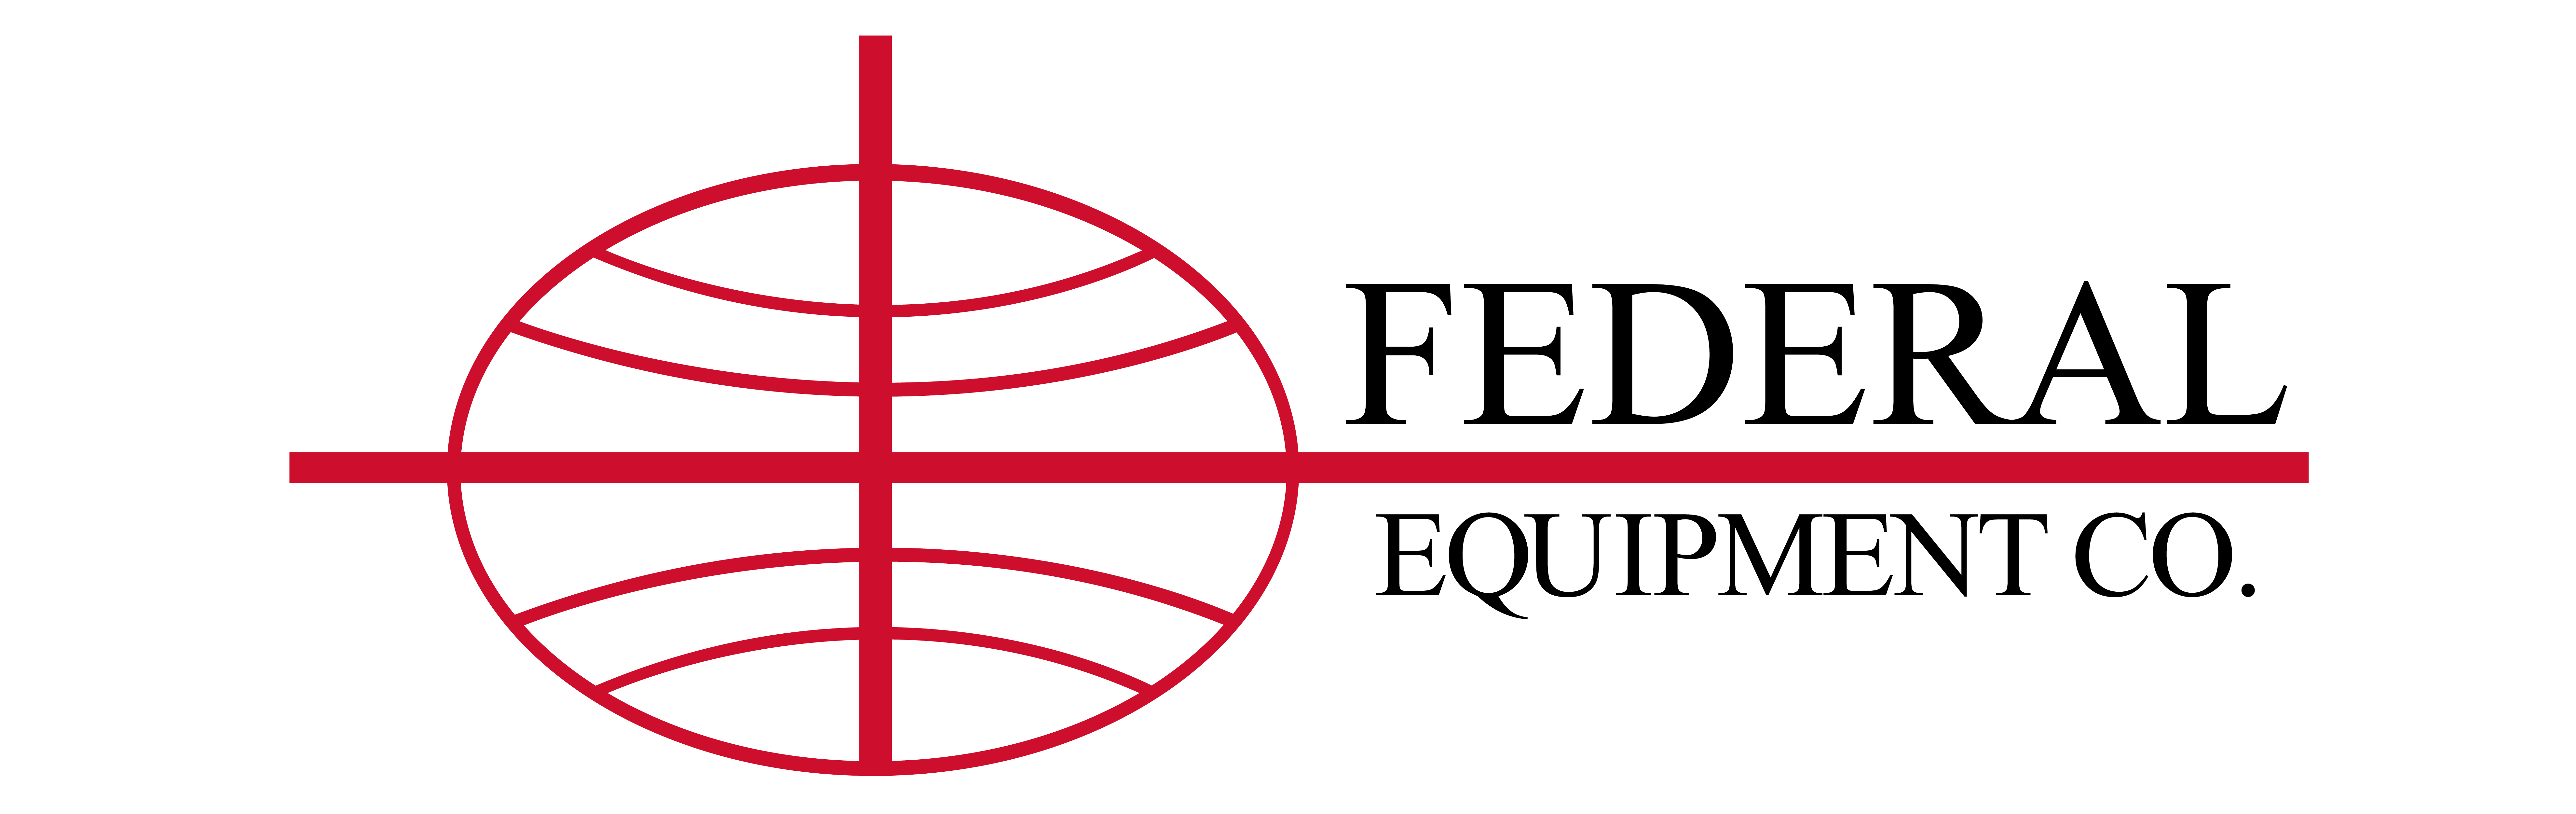 federal-equipment-company-logo-final